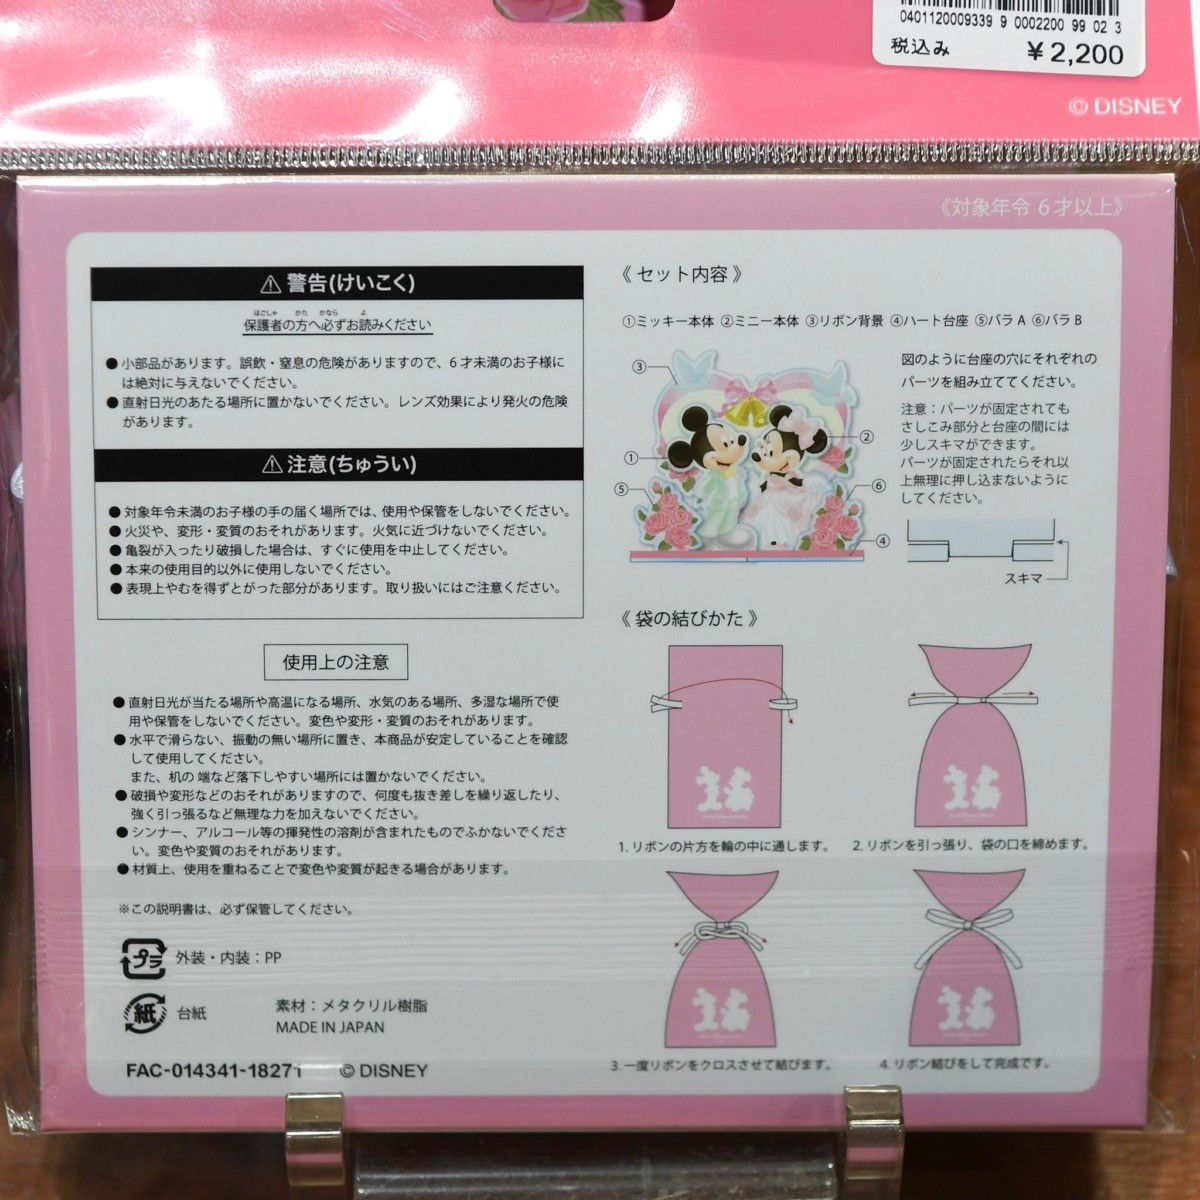 Mezzomikiのディズニーブログ 東京ディズニーランド ウエディンググッズにアクリルスタンドが本日より登場 ハートの台座 ラッピング袋付きです 20円です 詳しくは T Co Yobez5ibgr